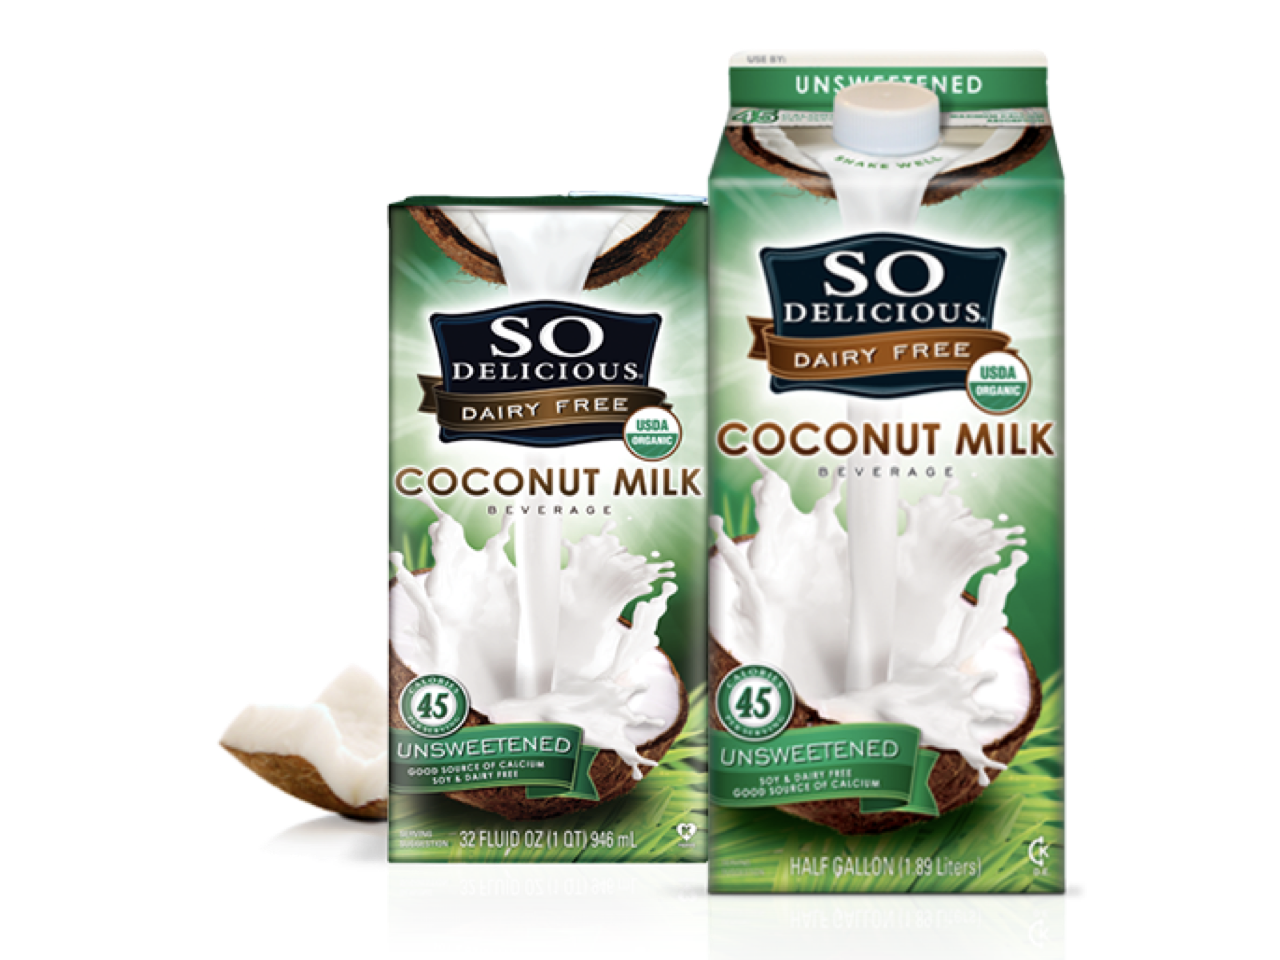 Coconut Milk: A Tropical Twist